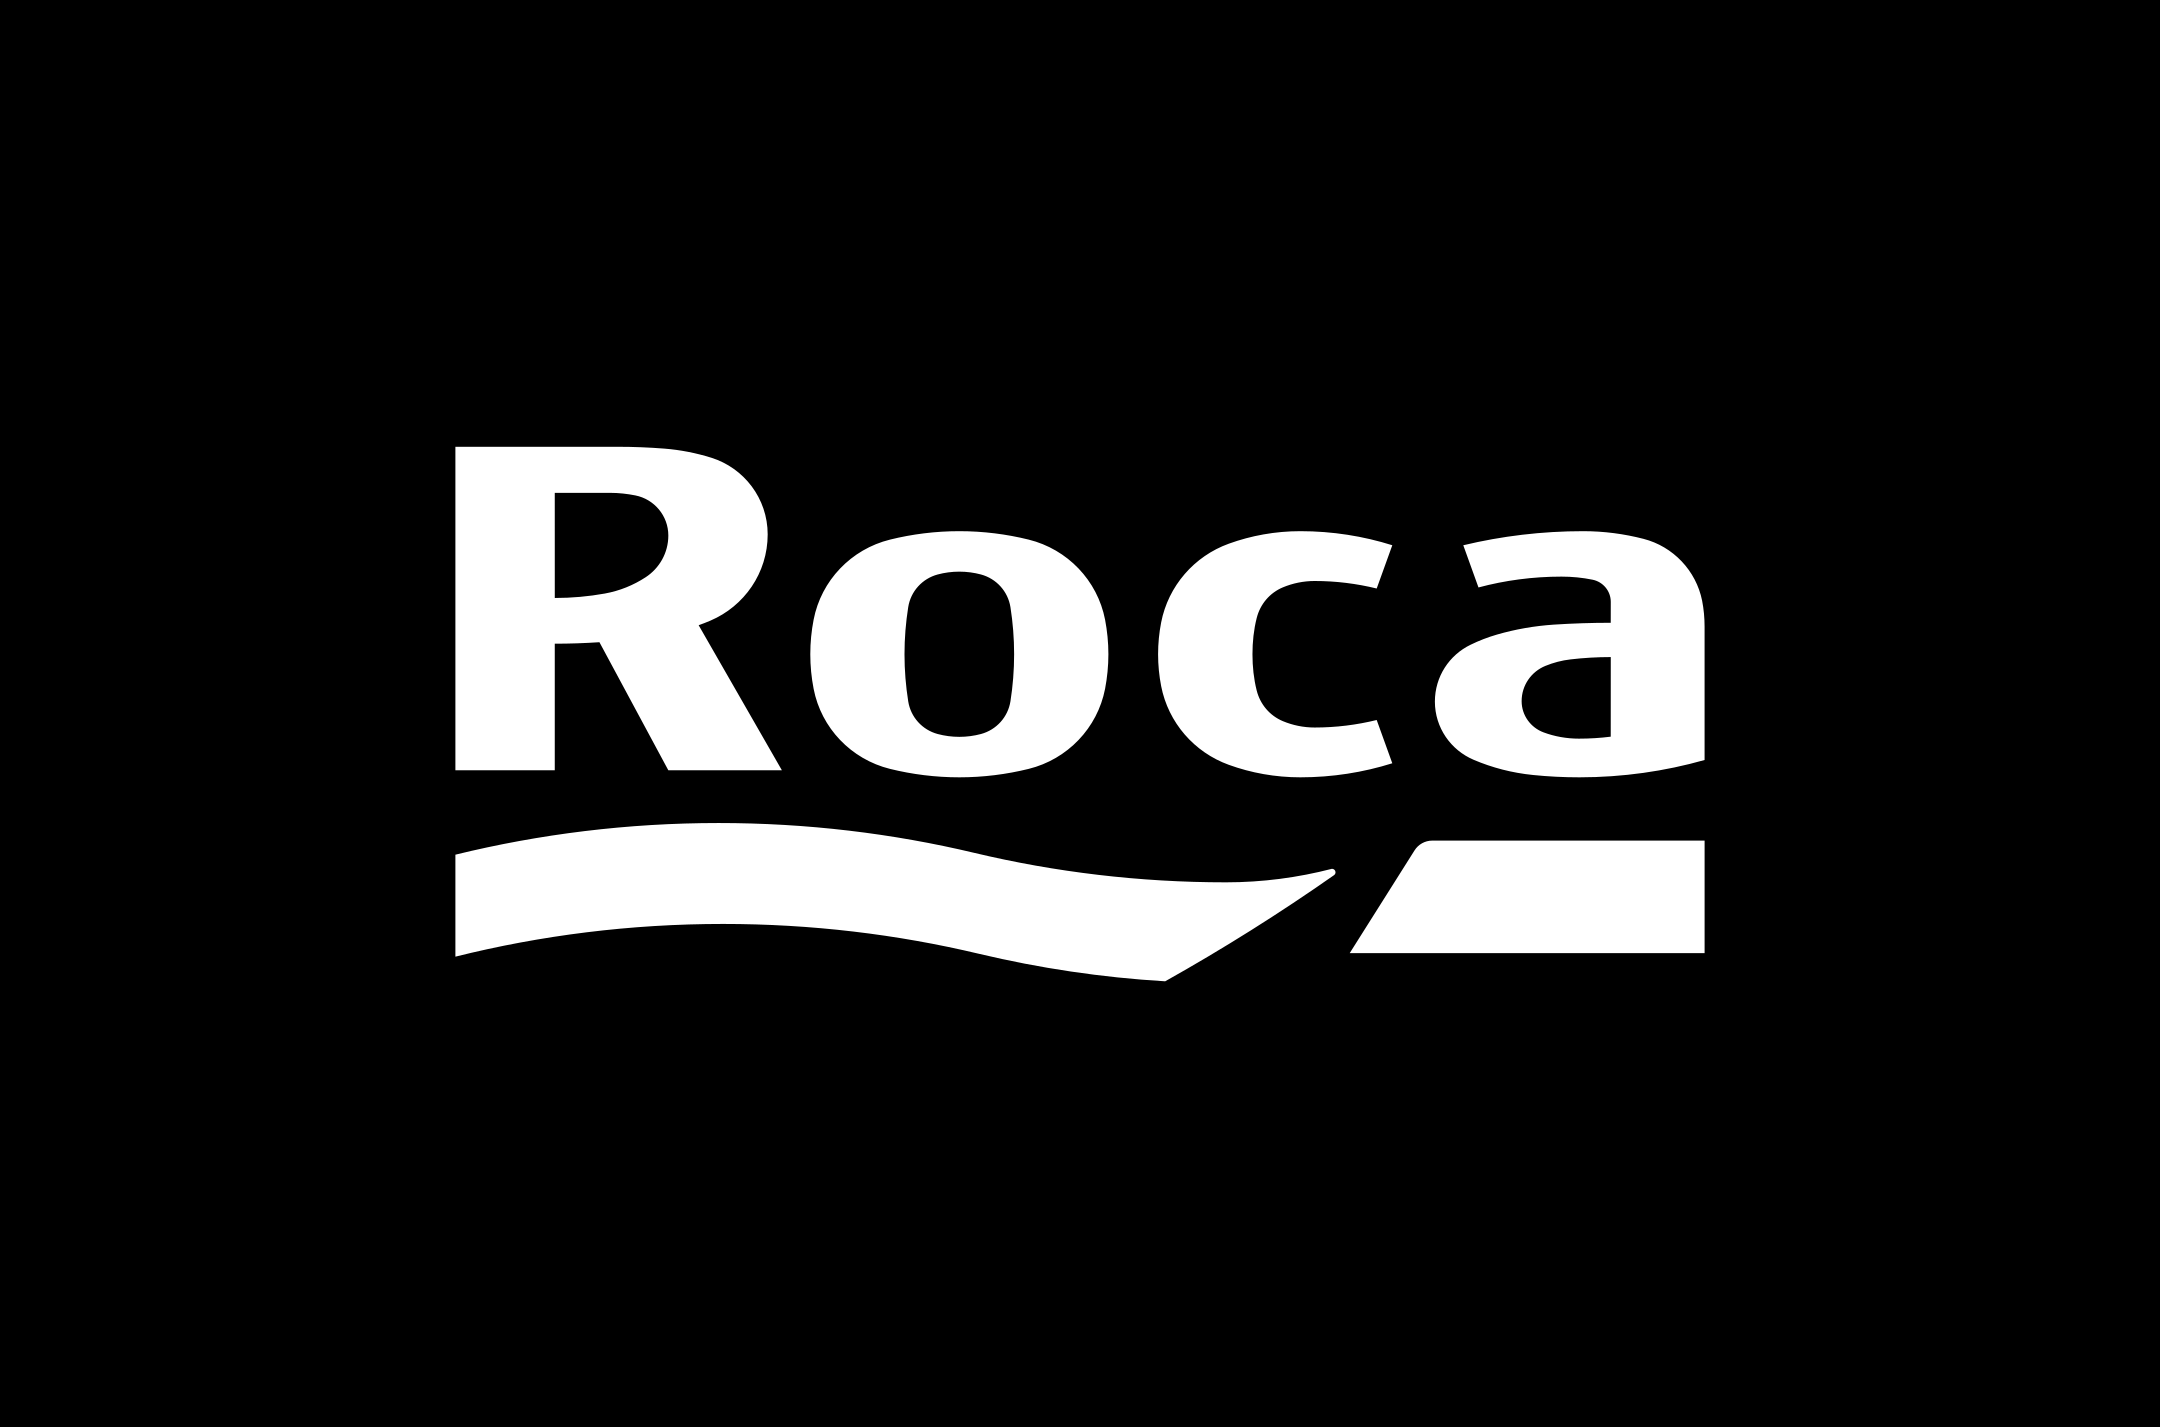 roca logo 2 - Roca Logo